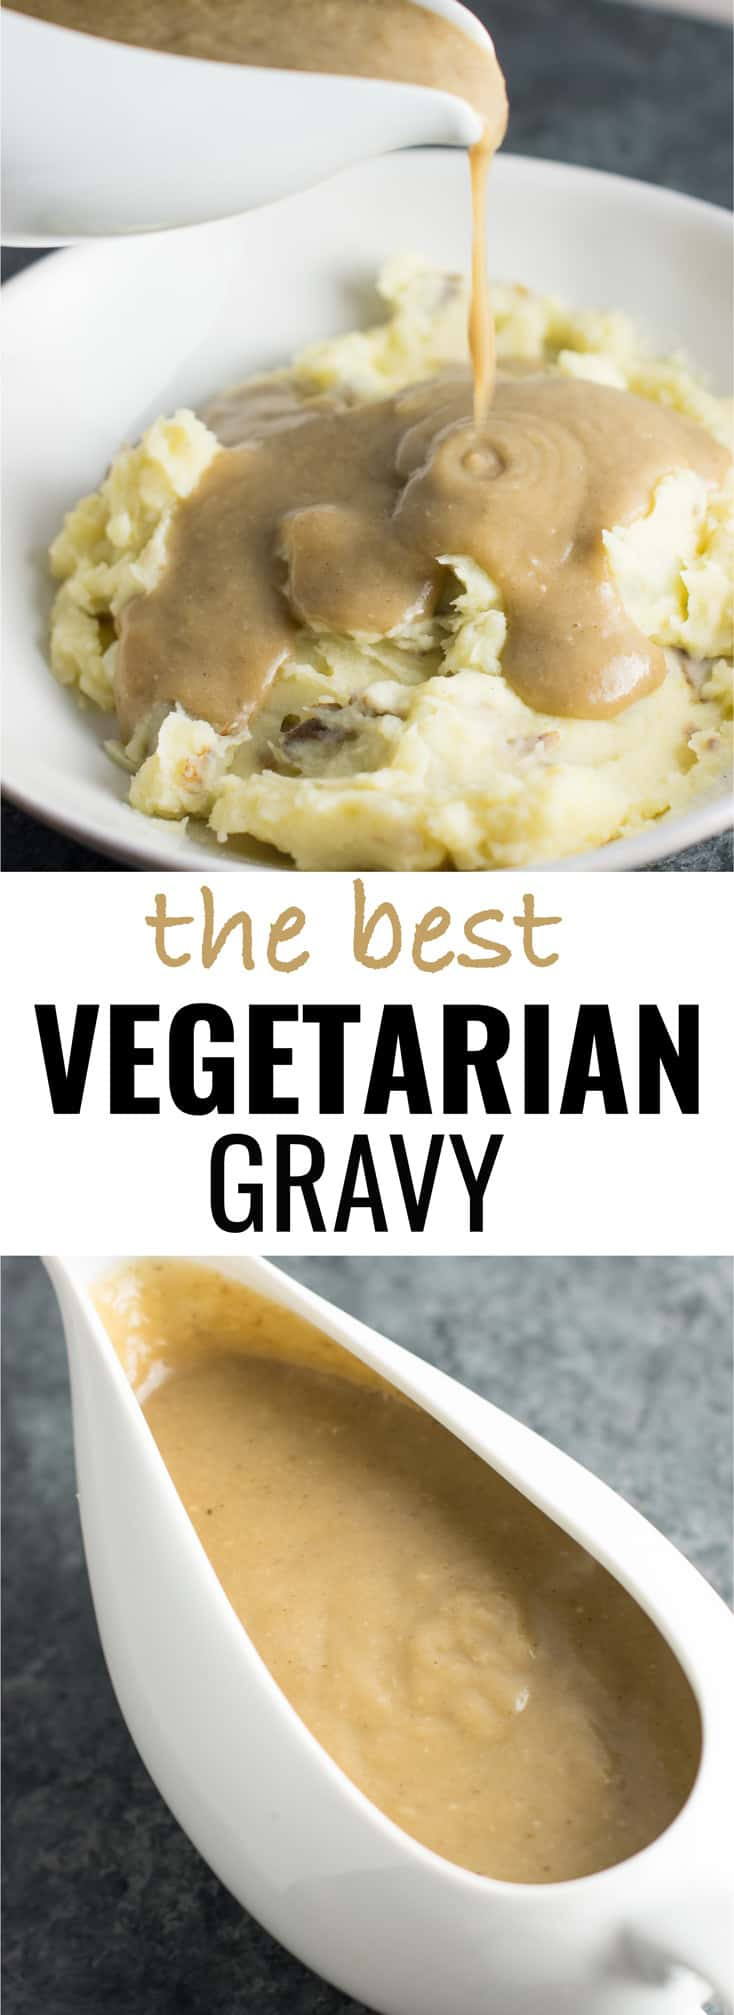 Best Vegan Gravy
 The Best Ve arian Gravy Recipe Build Your Bite